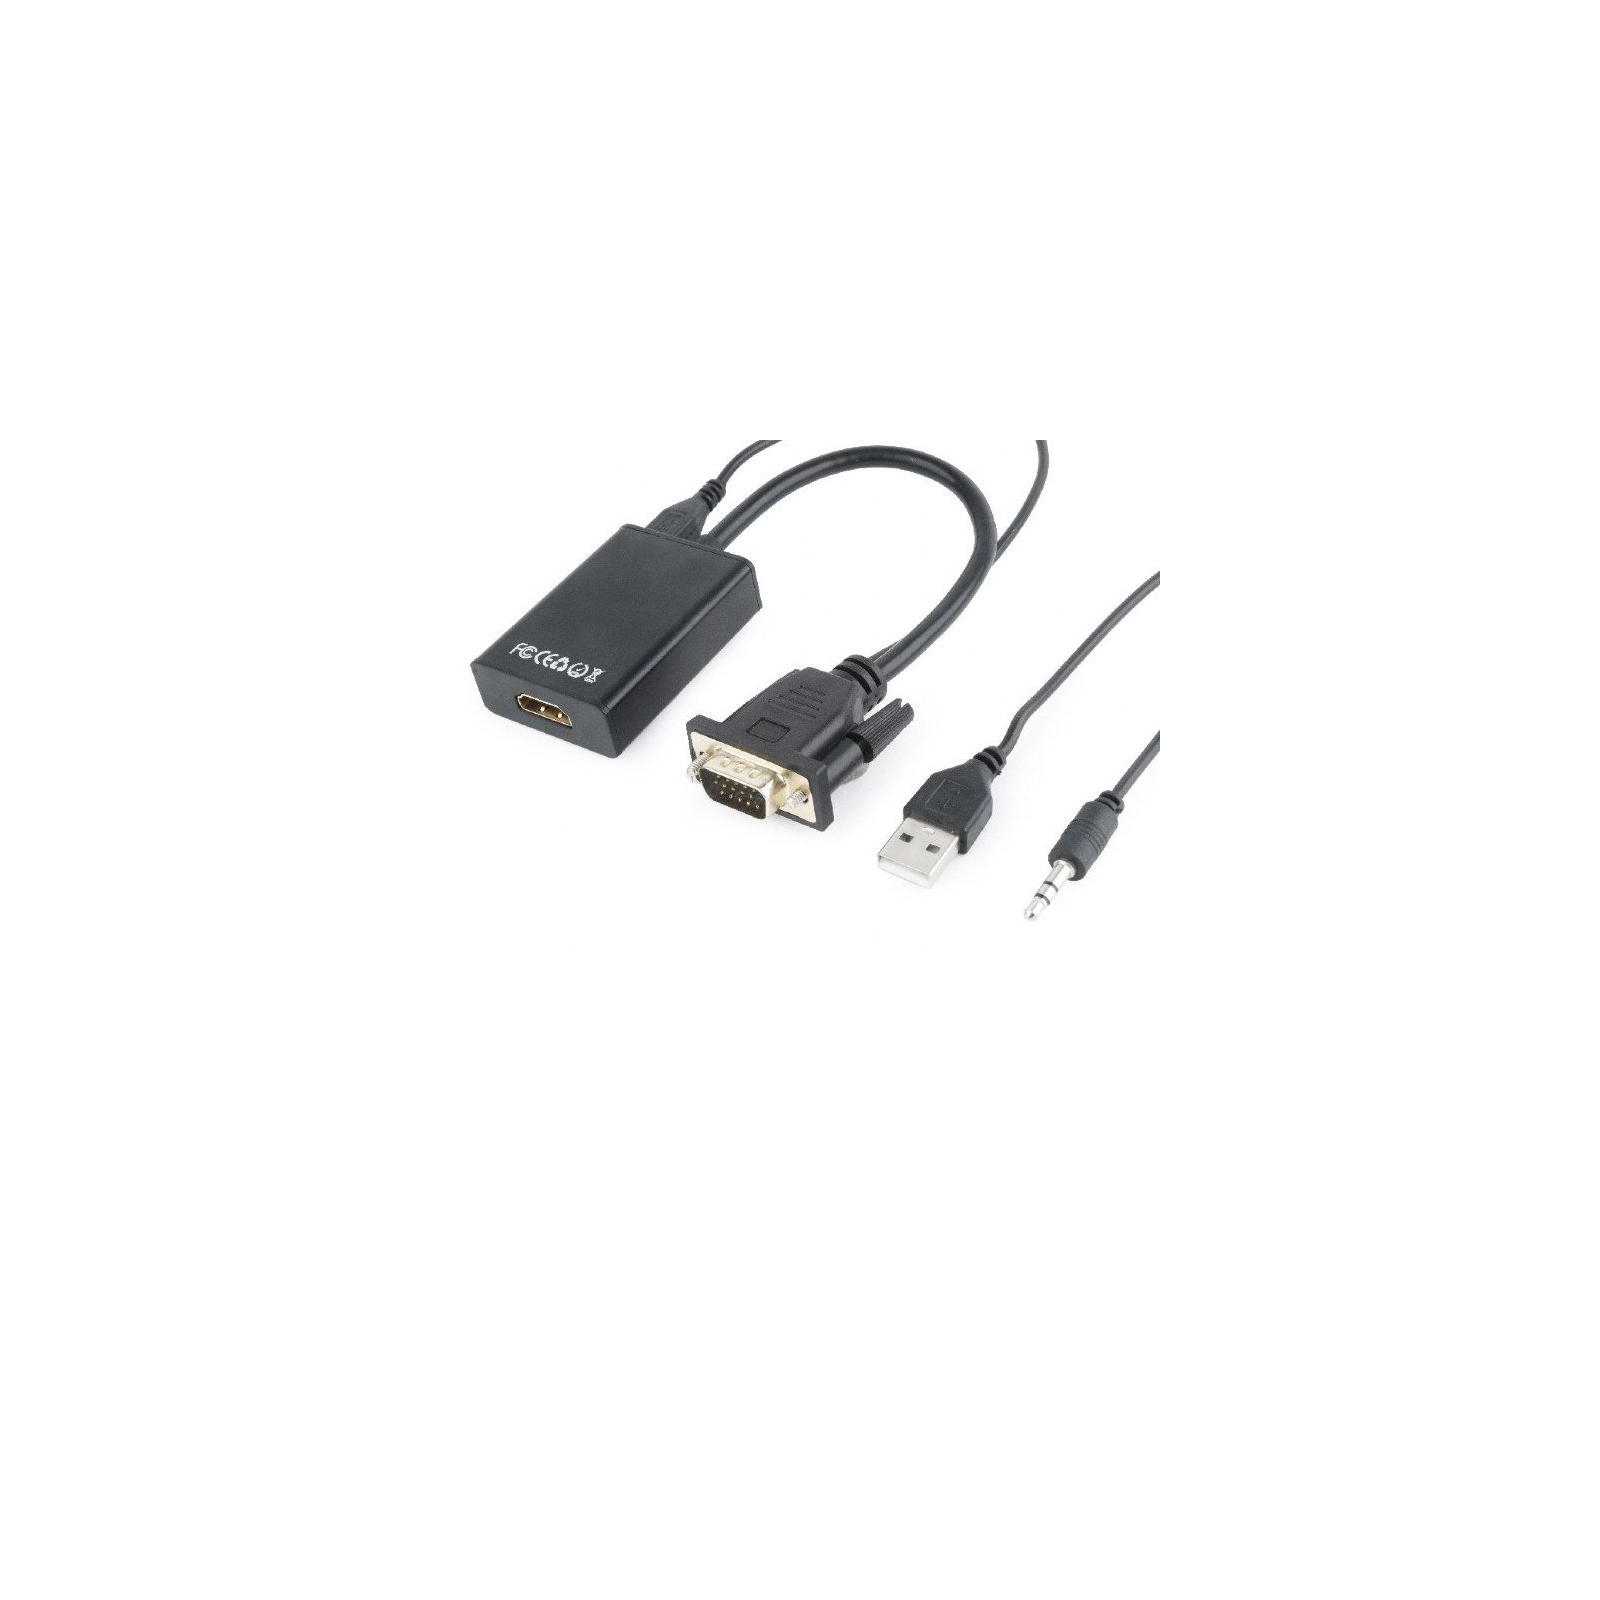 Переходник VGA to HDMI Cablexpert (A-VGA-HDMI-01) изображение 3